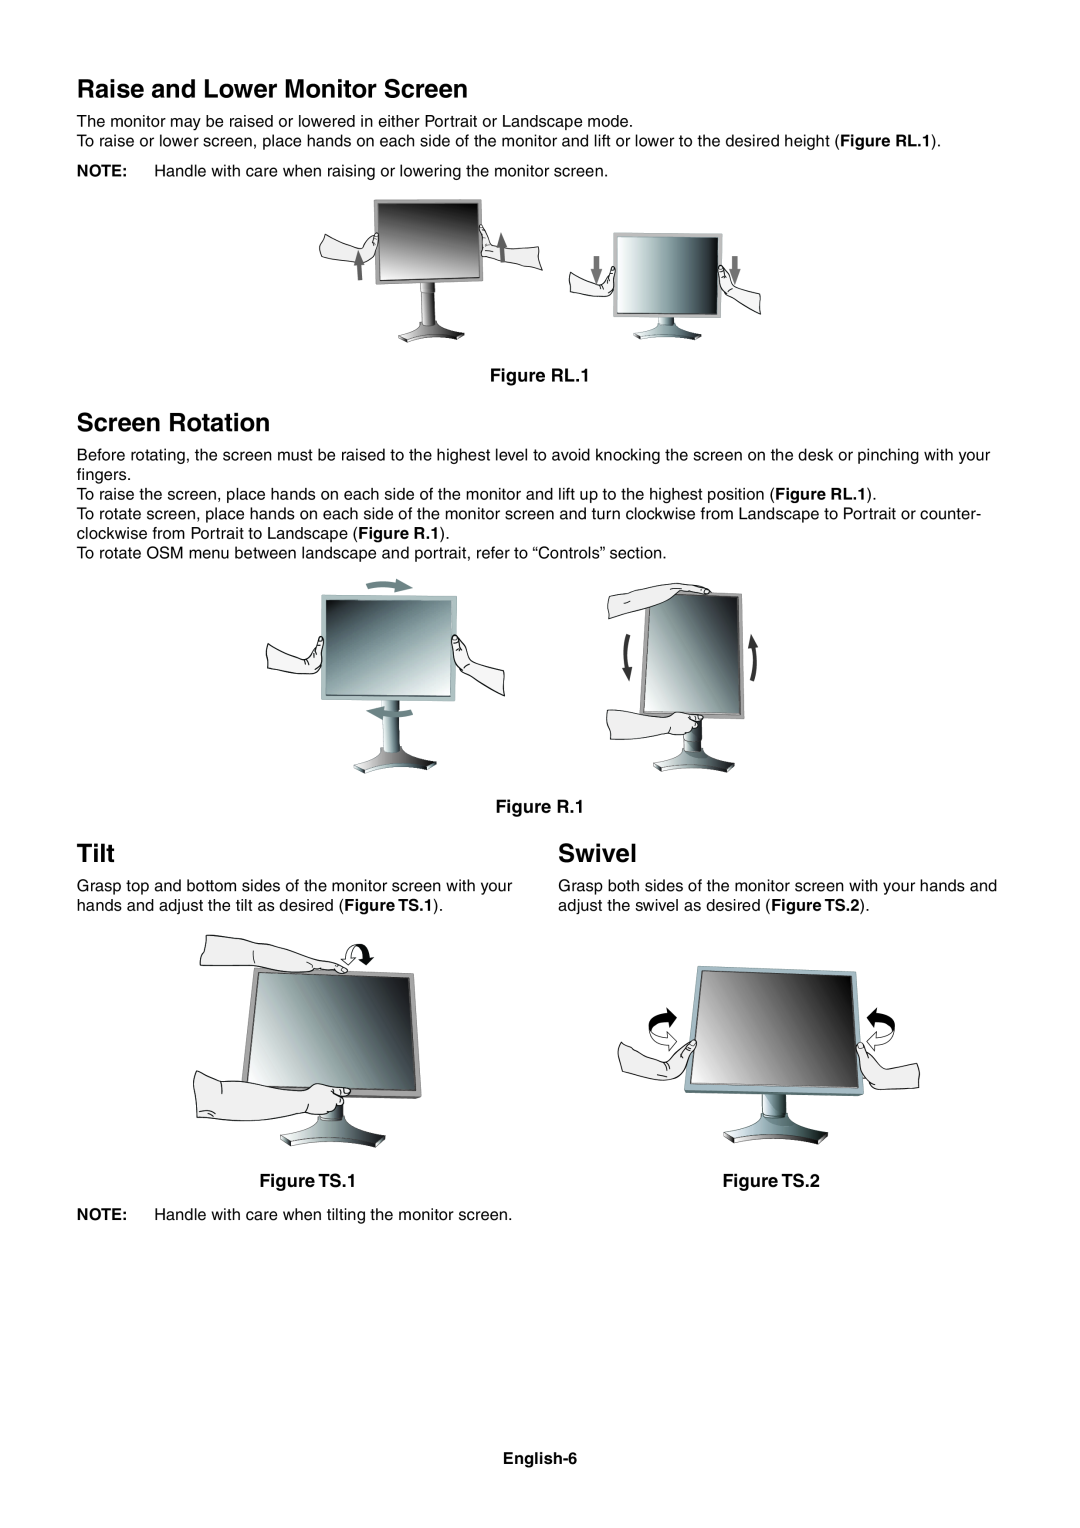 NEC LCD2090UXI Raise and Lower Monitor Screen, Screen Rotation, Tilt, Swivel, Figure RL.1, Figure R.1, Figure TS.1 